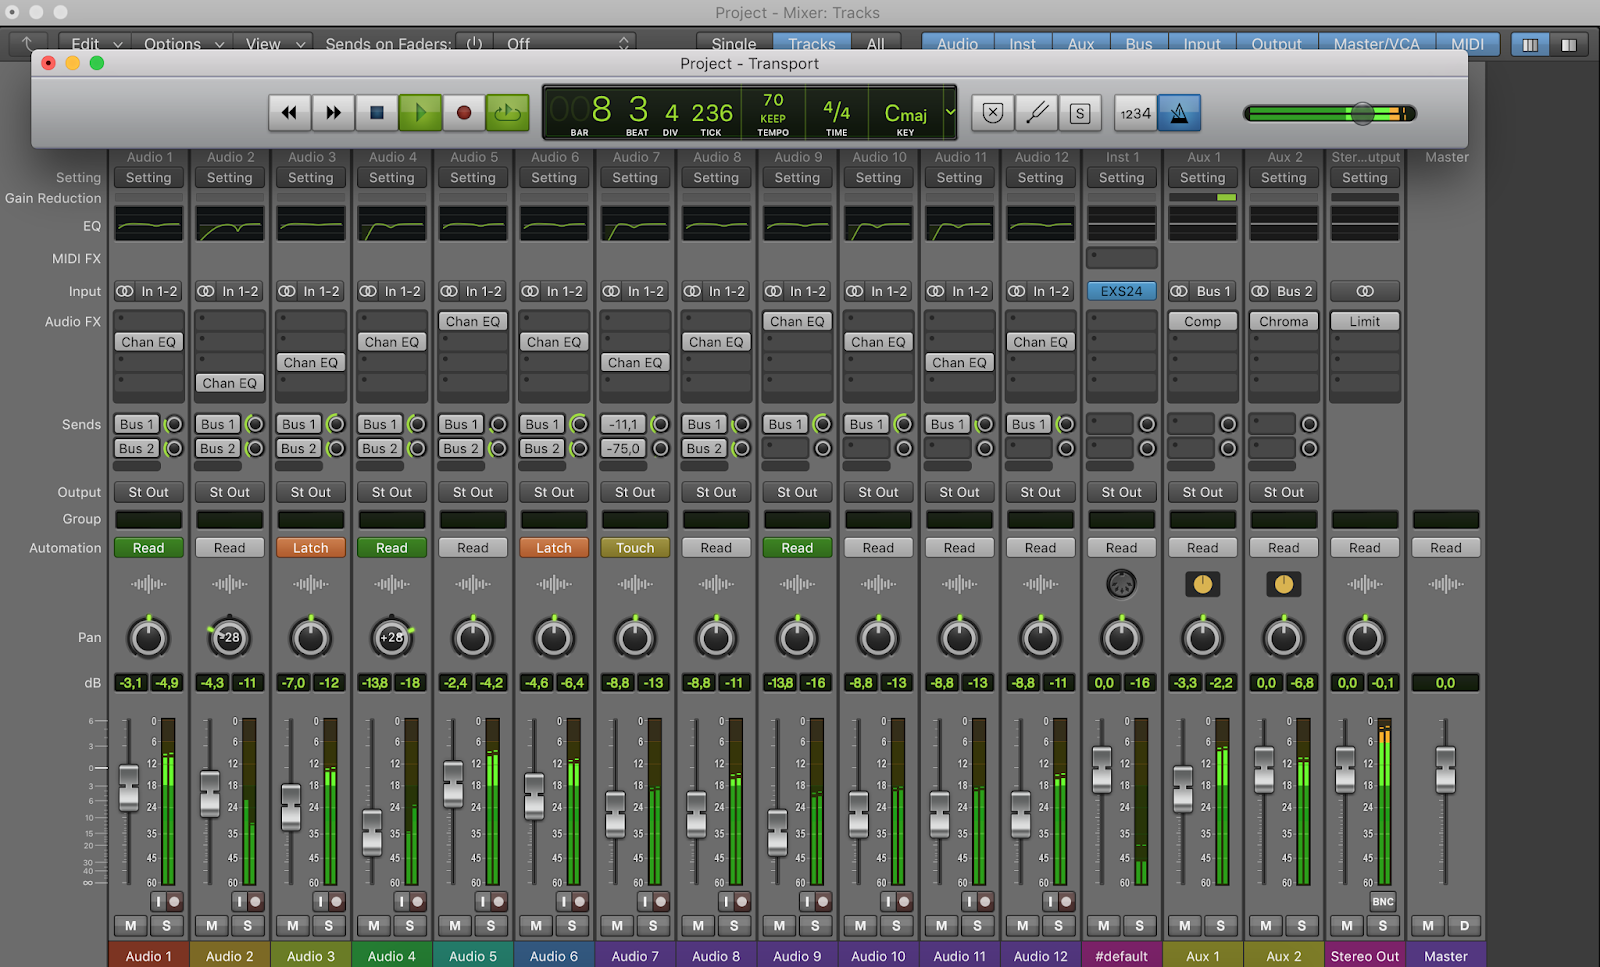 Topic mixing. M Audio code 25 Logic Pro x. Logic Pro x Pro Tools. Контроллер миди для Logic Pro x. Pro Tools или Logic Pro x.